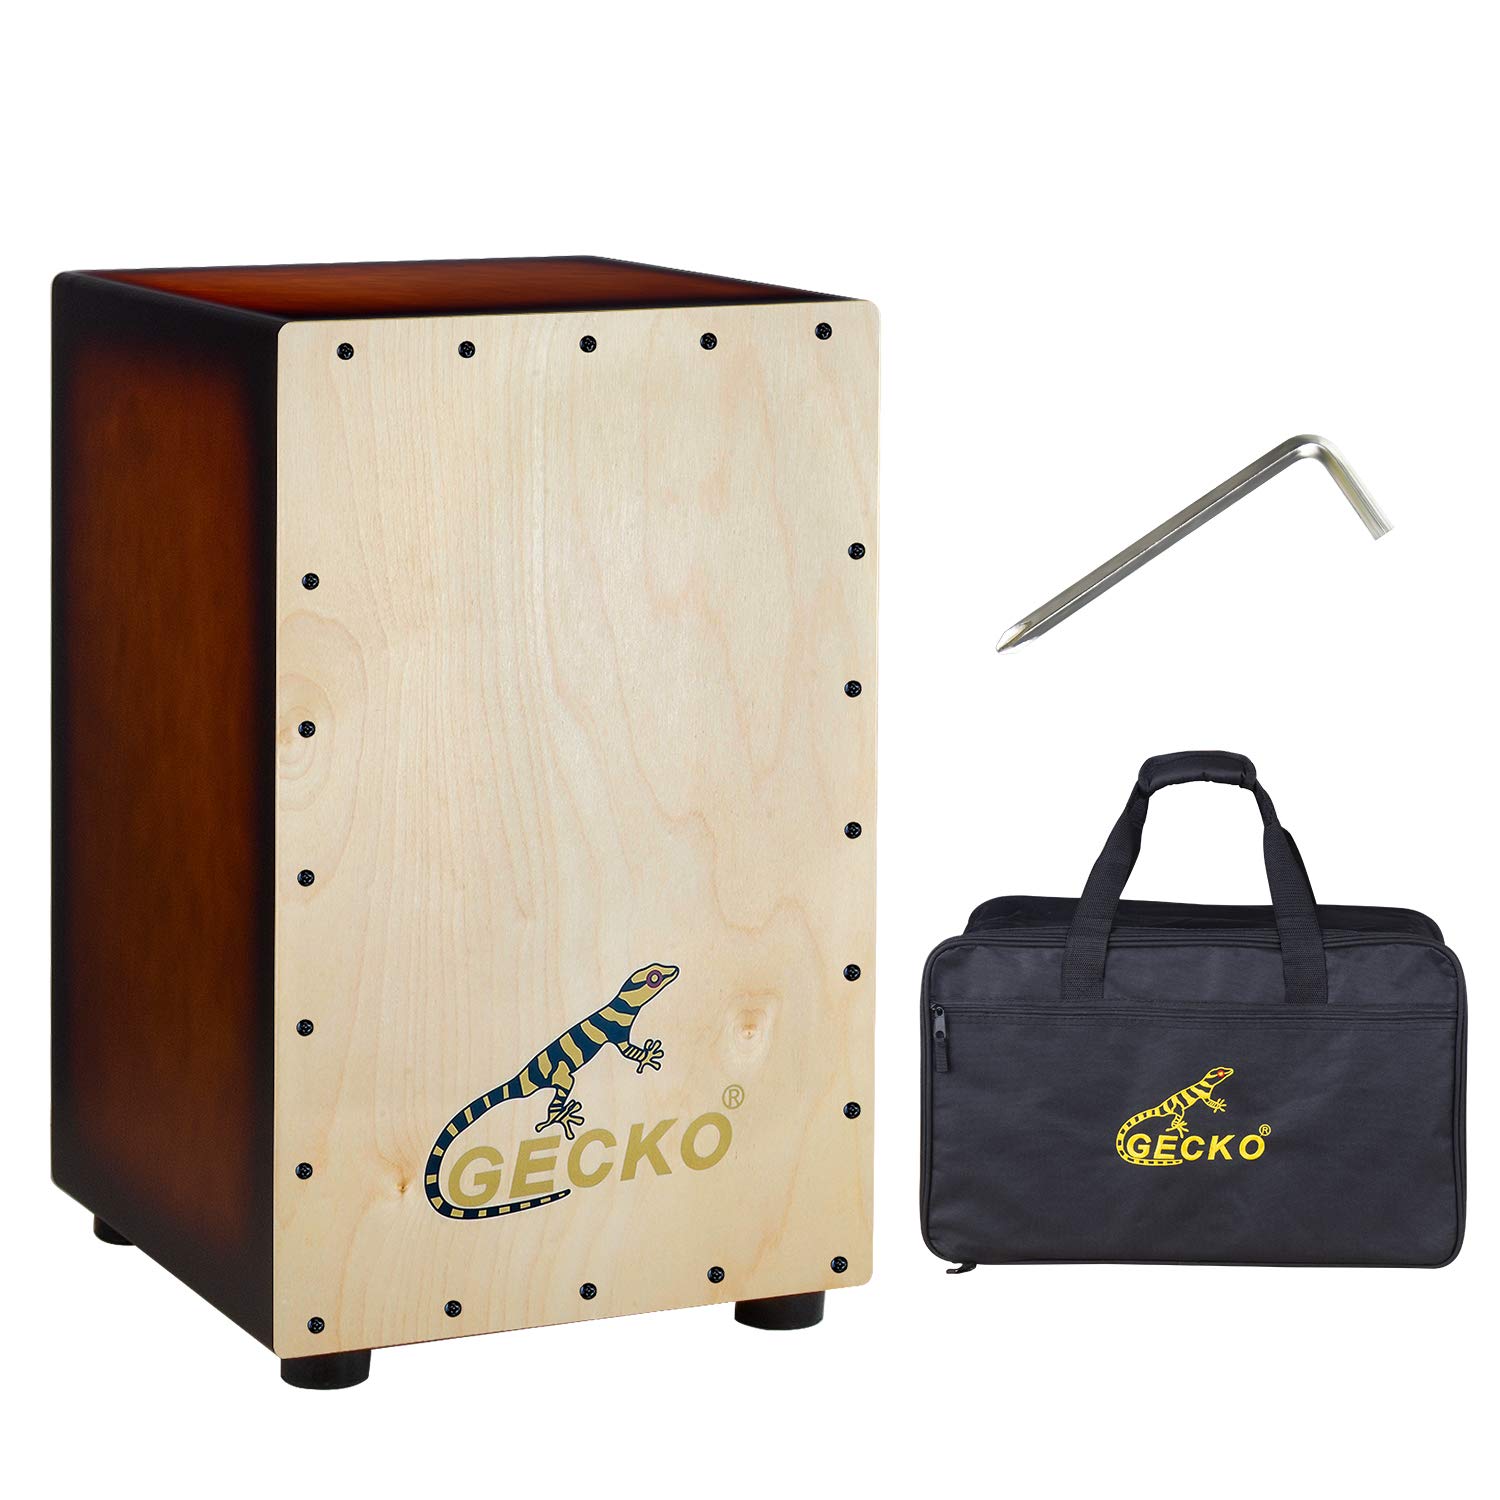 Sawtooth ST-CAJ120 Cajon Ash Wood Music Drum Box & Carry Bag | eBay